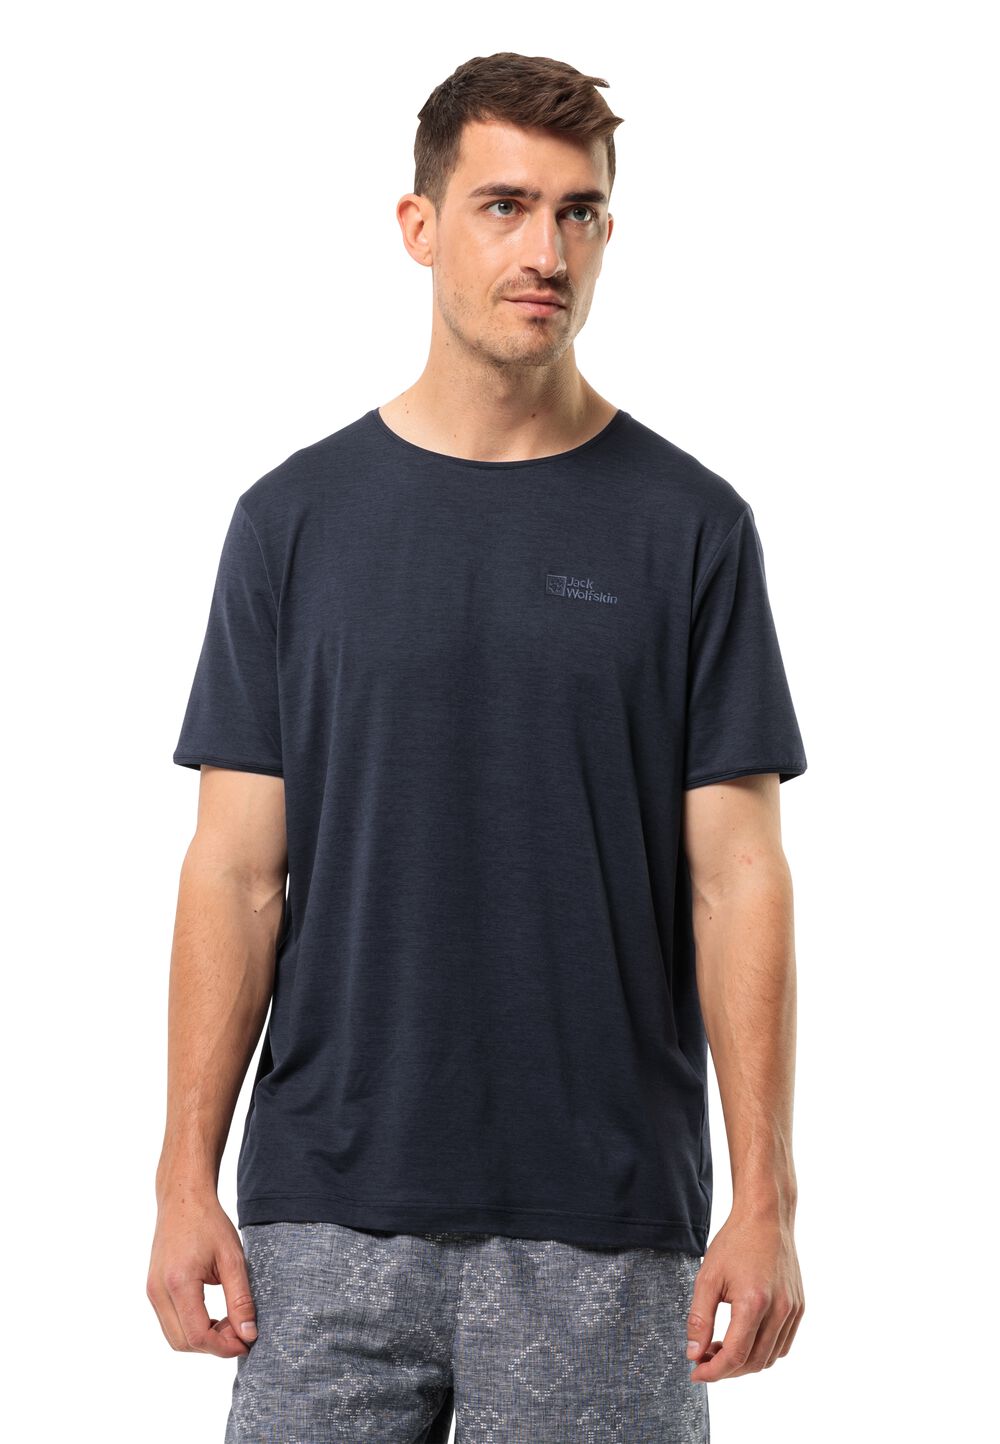 Jack Wolfskin Travel T-Shirt Men Functioneel shirt Heren L blue night blue